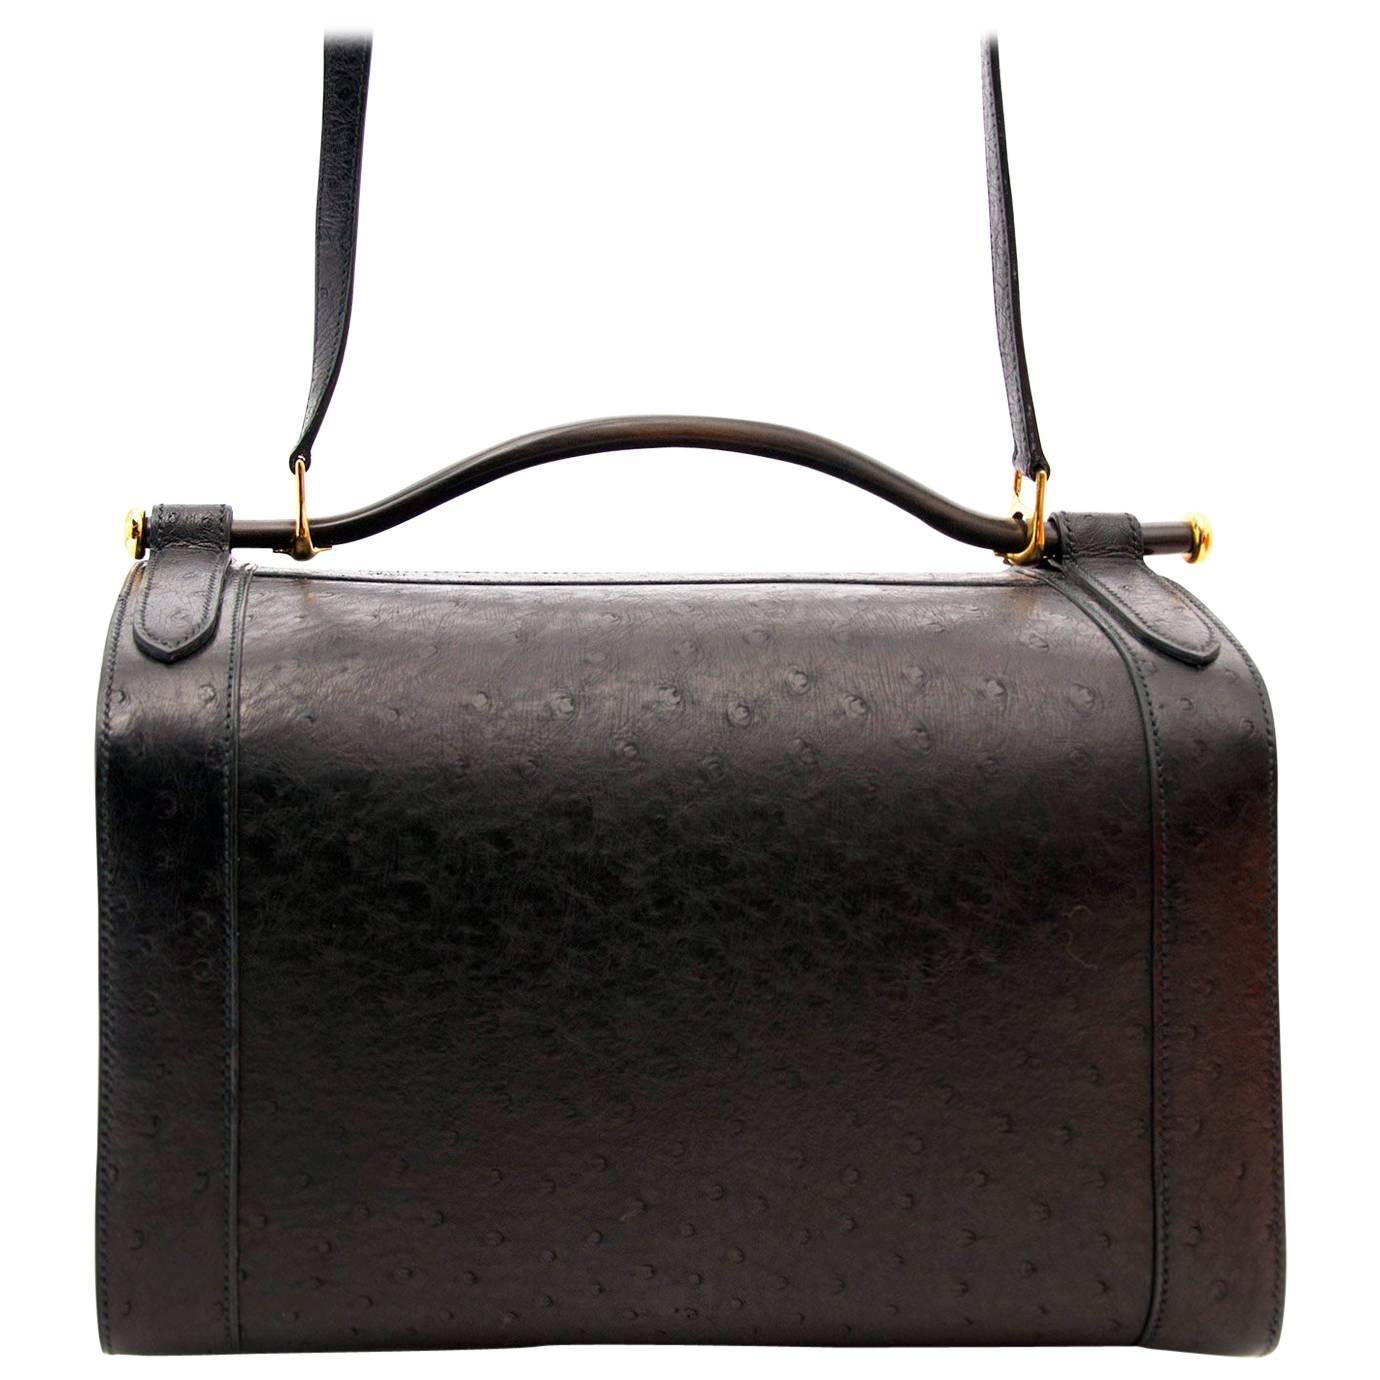 Very Rare Hermes Sac Mallette Handbag